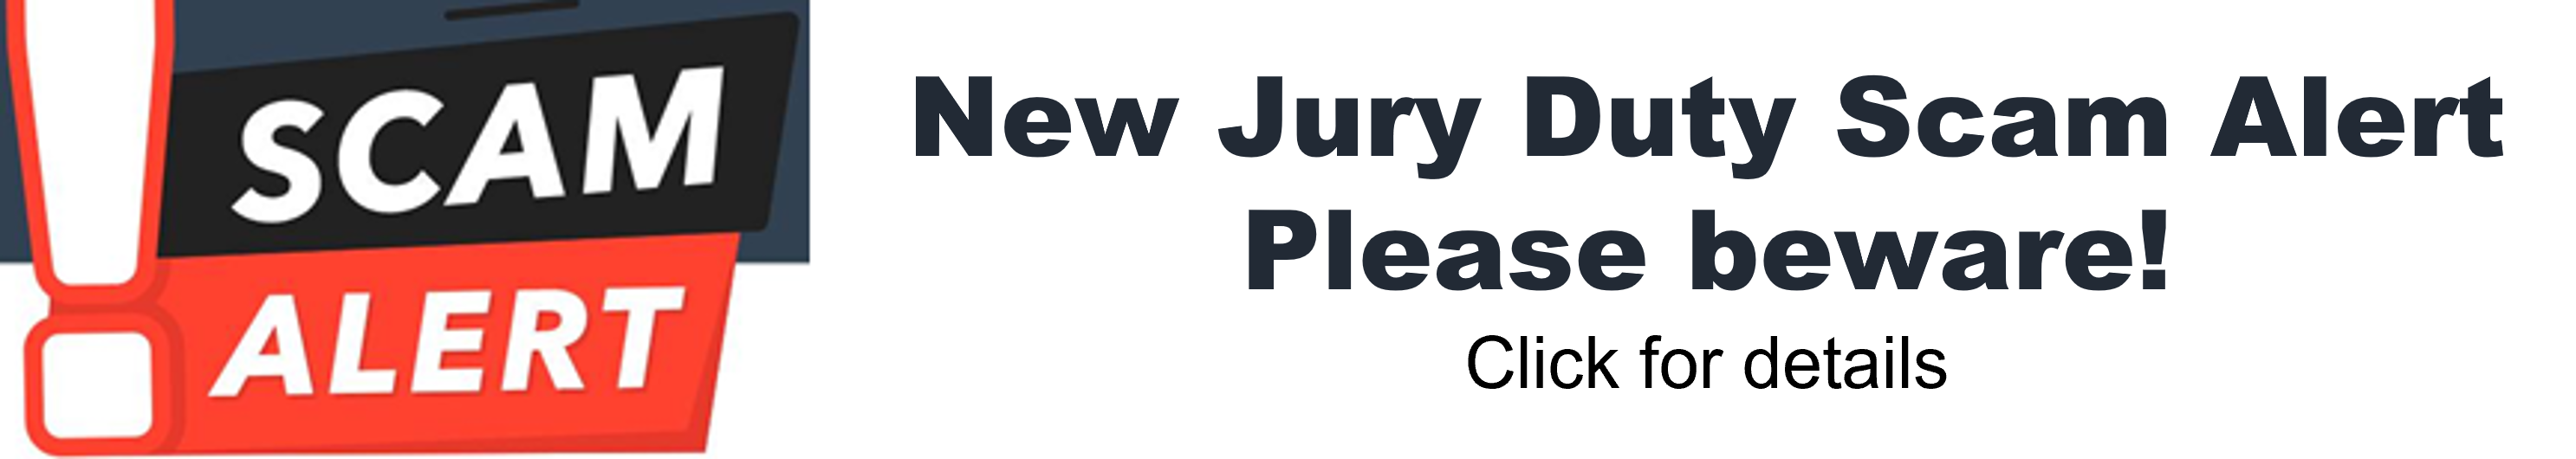 New Jury Duty Scam Alert Poster